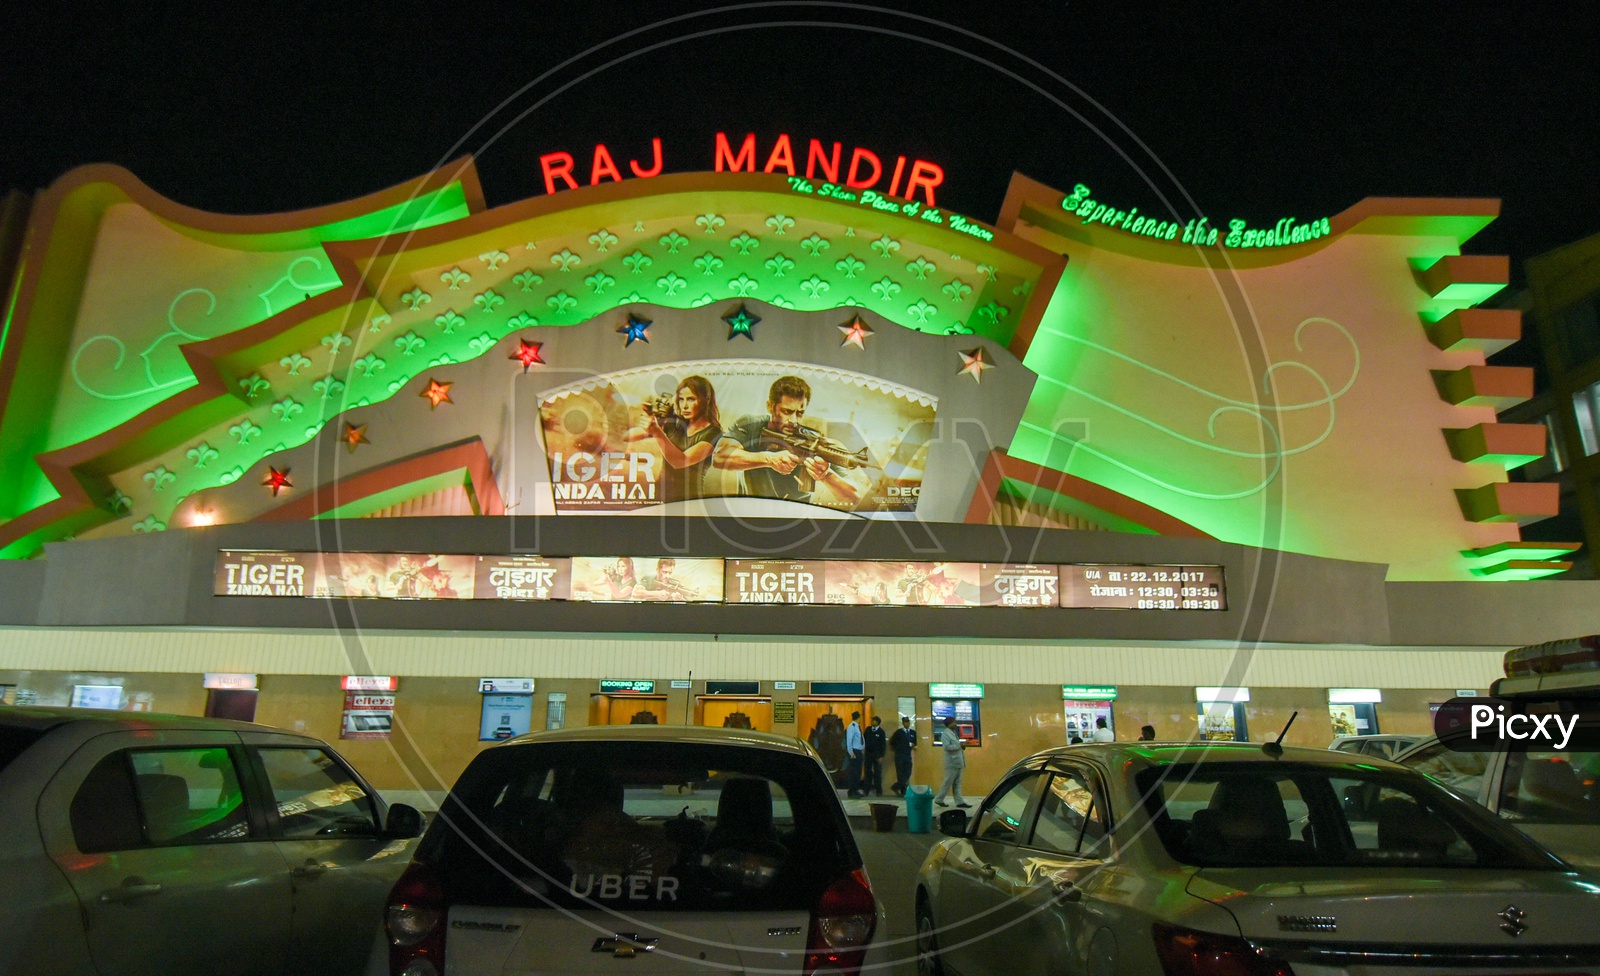 Raj Mandir Theatre